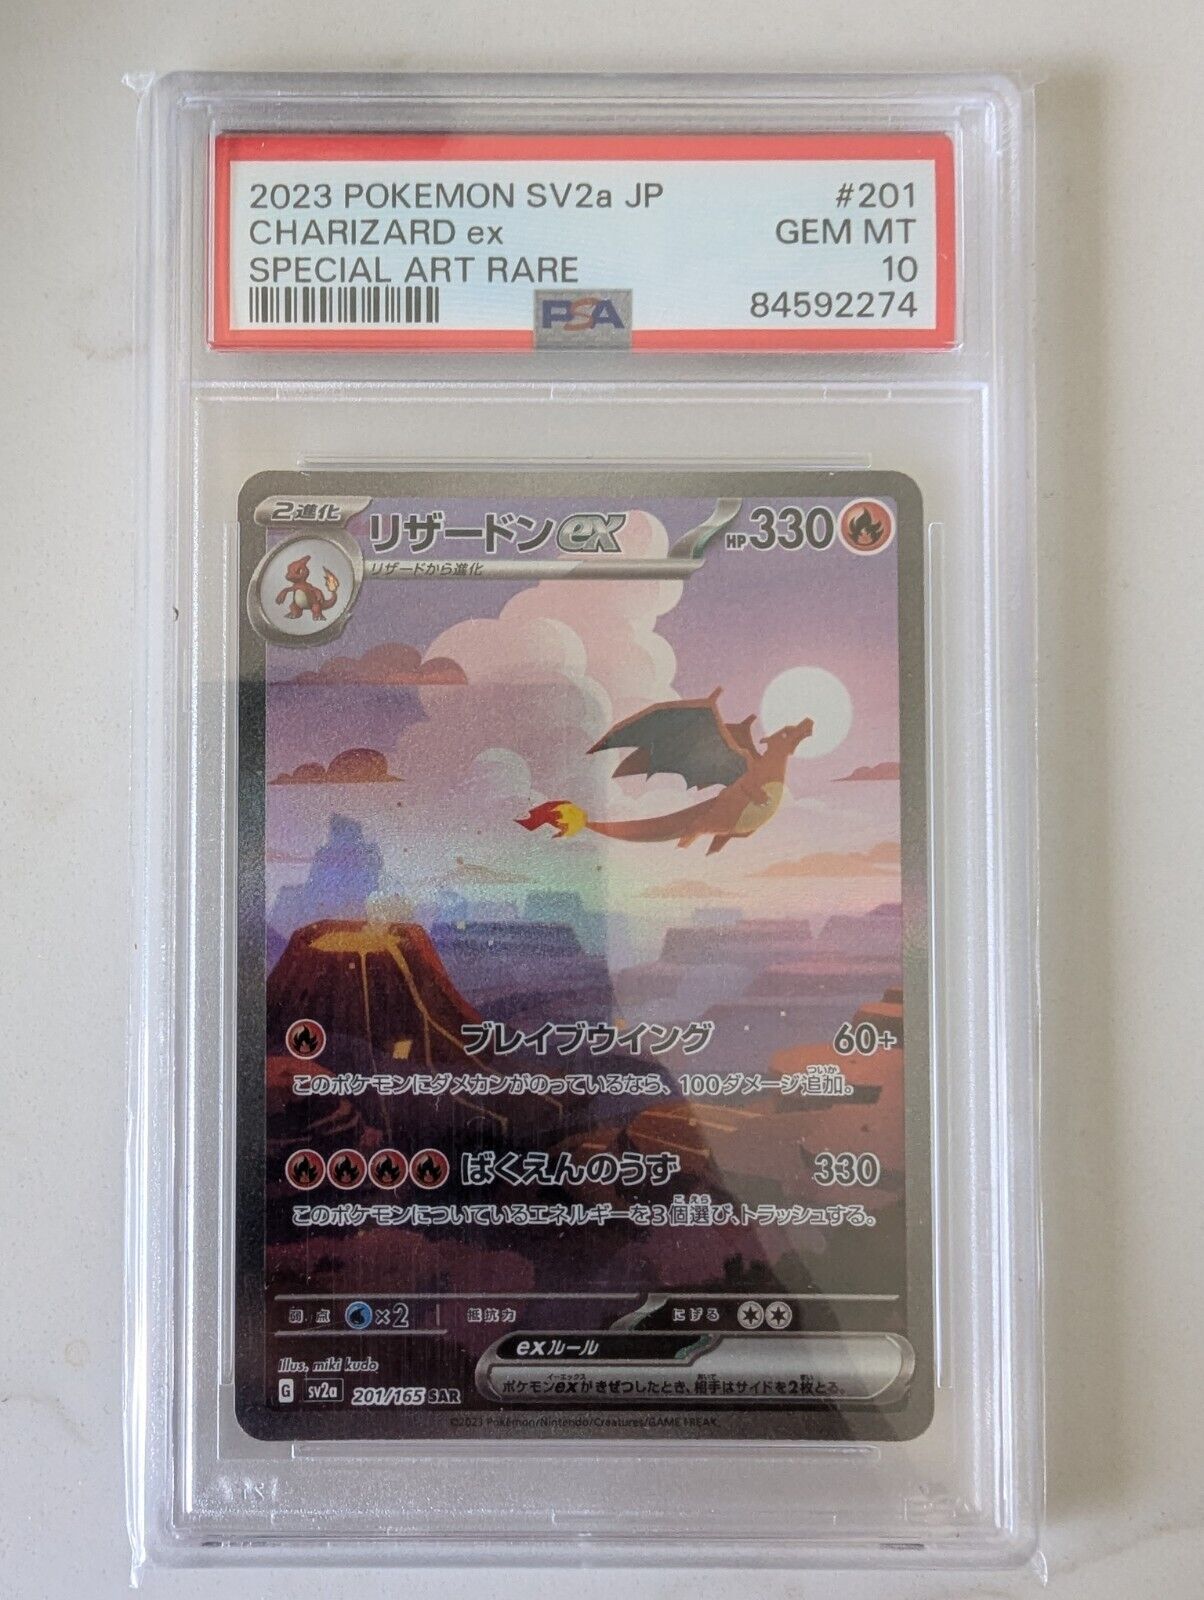 PSA 10 Gem Mint Charizard ex Japanese Pokemon card Game 151 sv2a 201/165 SAR